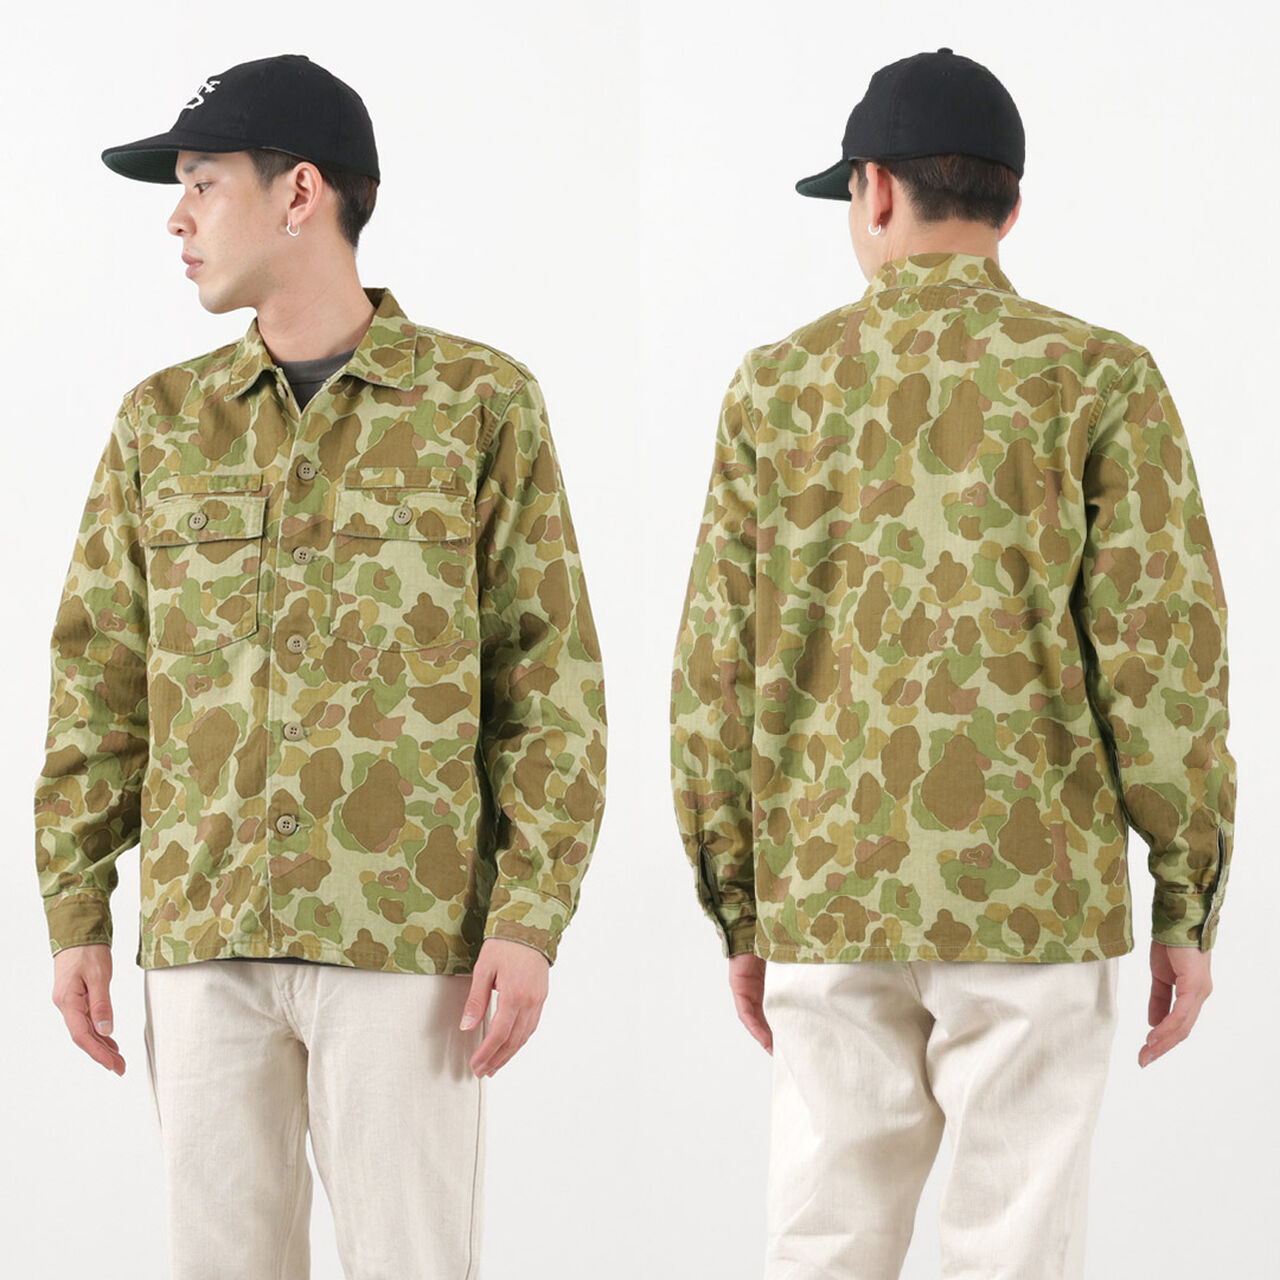 F2362 Fatigue shirt jacket camo,, large image number 11